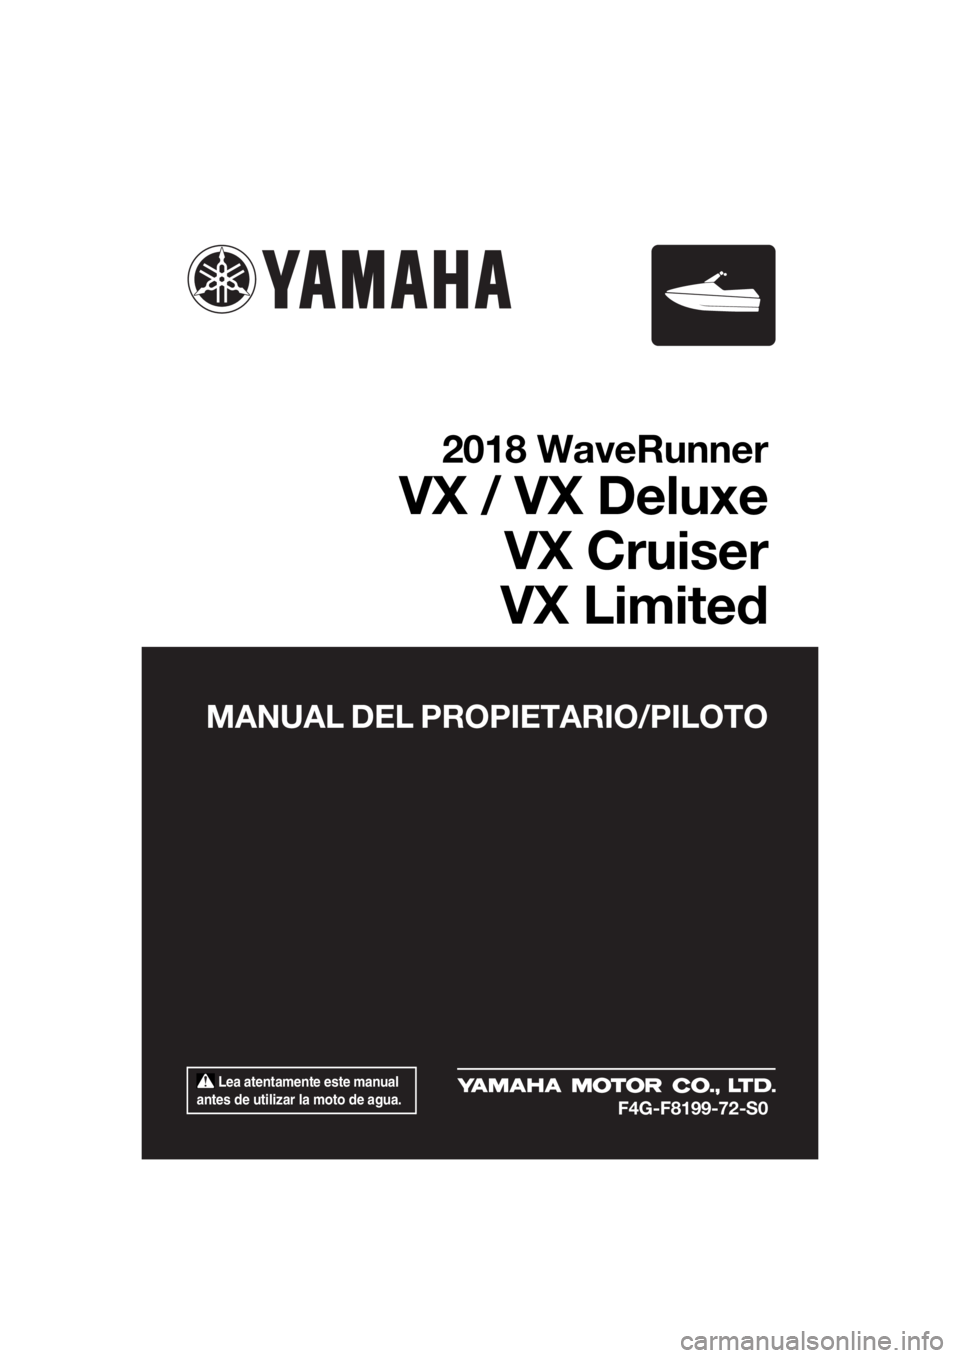 YAMAHA VX DELUXE 2018  Manuale de Empleo (in Spanish)  Lea atentamente este manual 
antes de utilizar la moto de agua.
MANUAL DEL PROPIETARIO/PILOTO
2018 WaveRunner
VX / VX Deluxe
VX Cruiser
VX Limited
F4G-F8199-72-S0
UF4G72S0.book  Page 1  Monday, July 